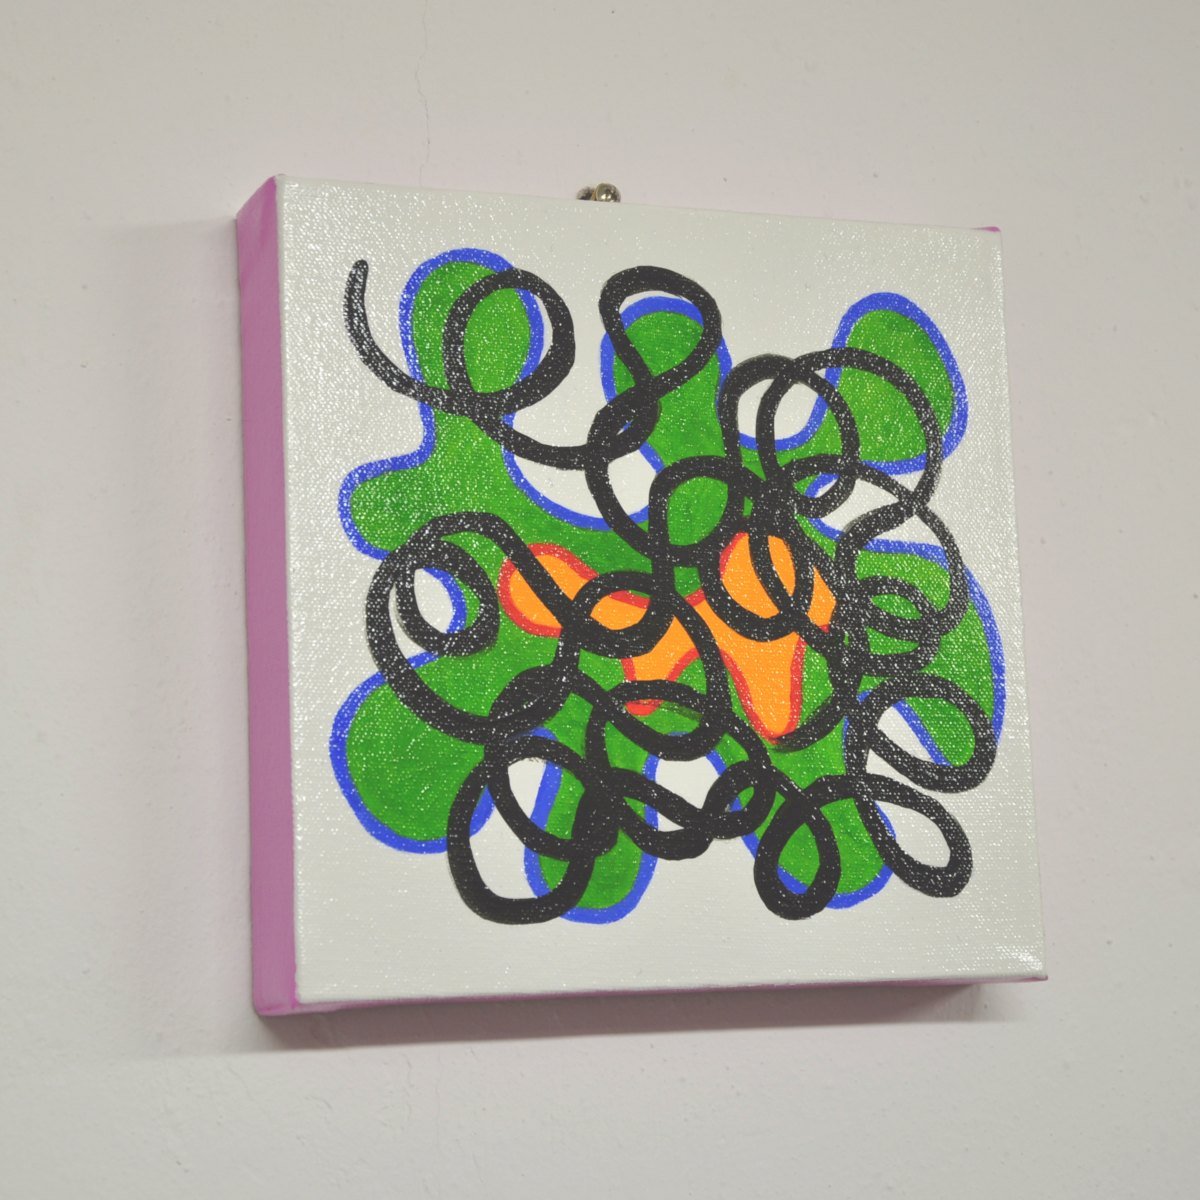 Erasing Ideogram abstract acrylic painting by Walter Perdan